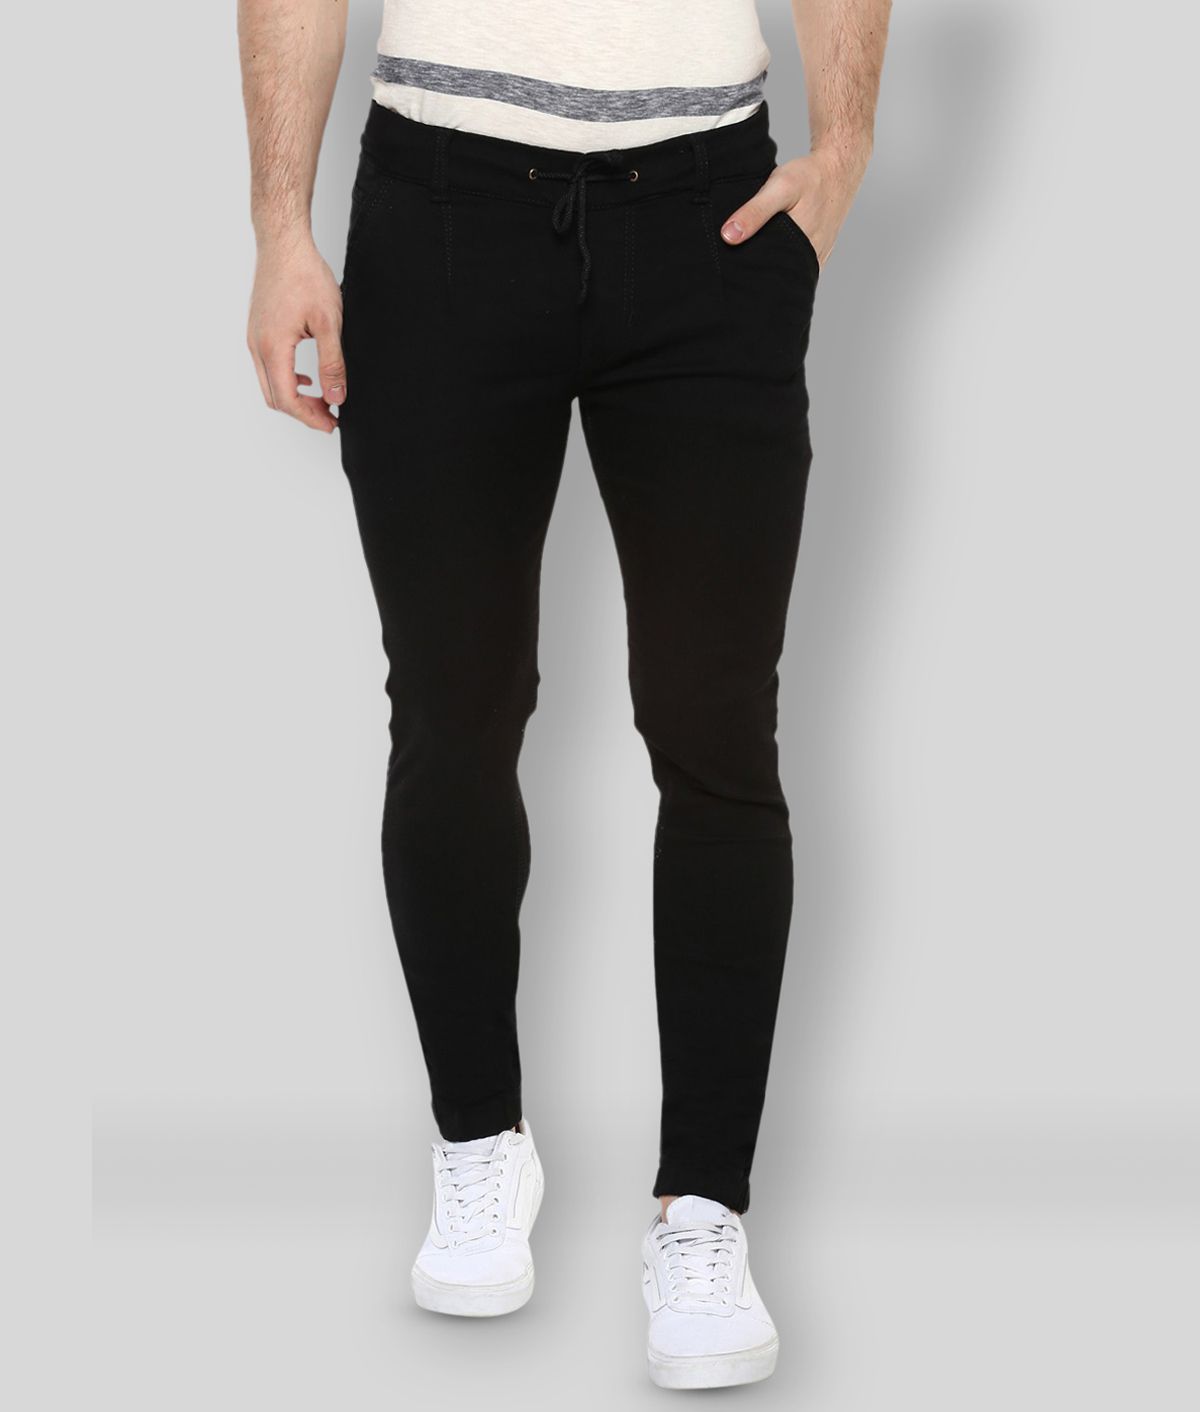     			Urbano Fashion - Black Cotton Blend Slim Fit Men's Jeans ( Pack of 1 )